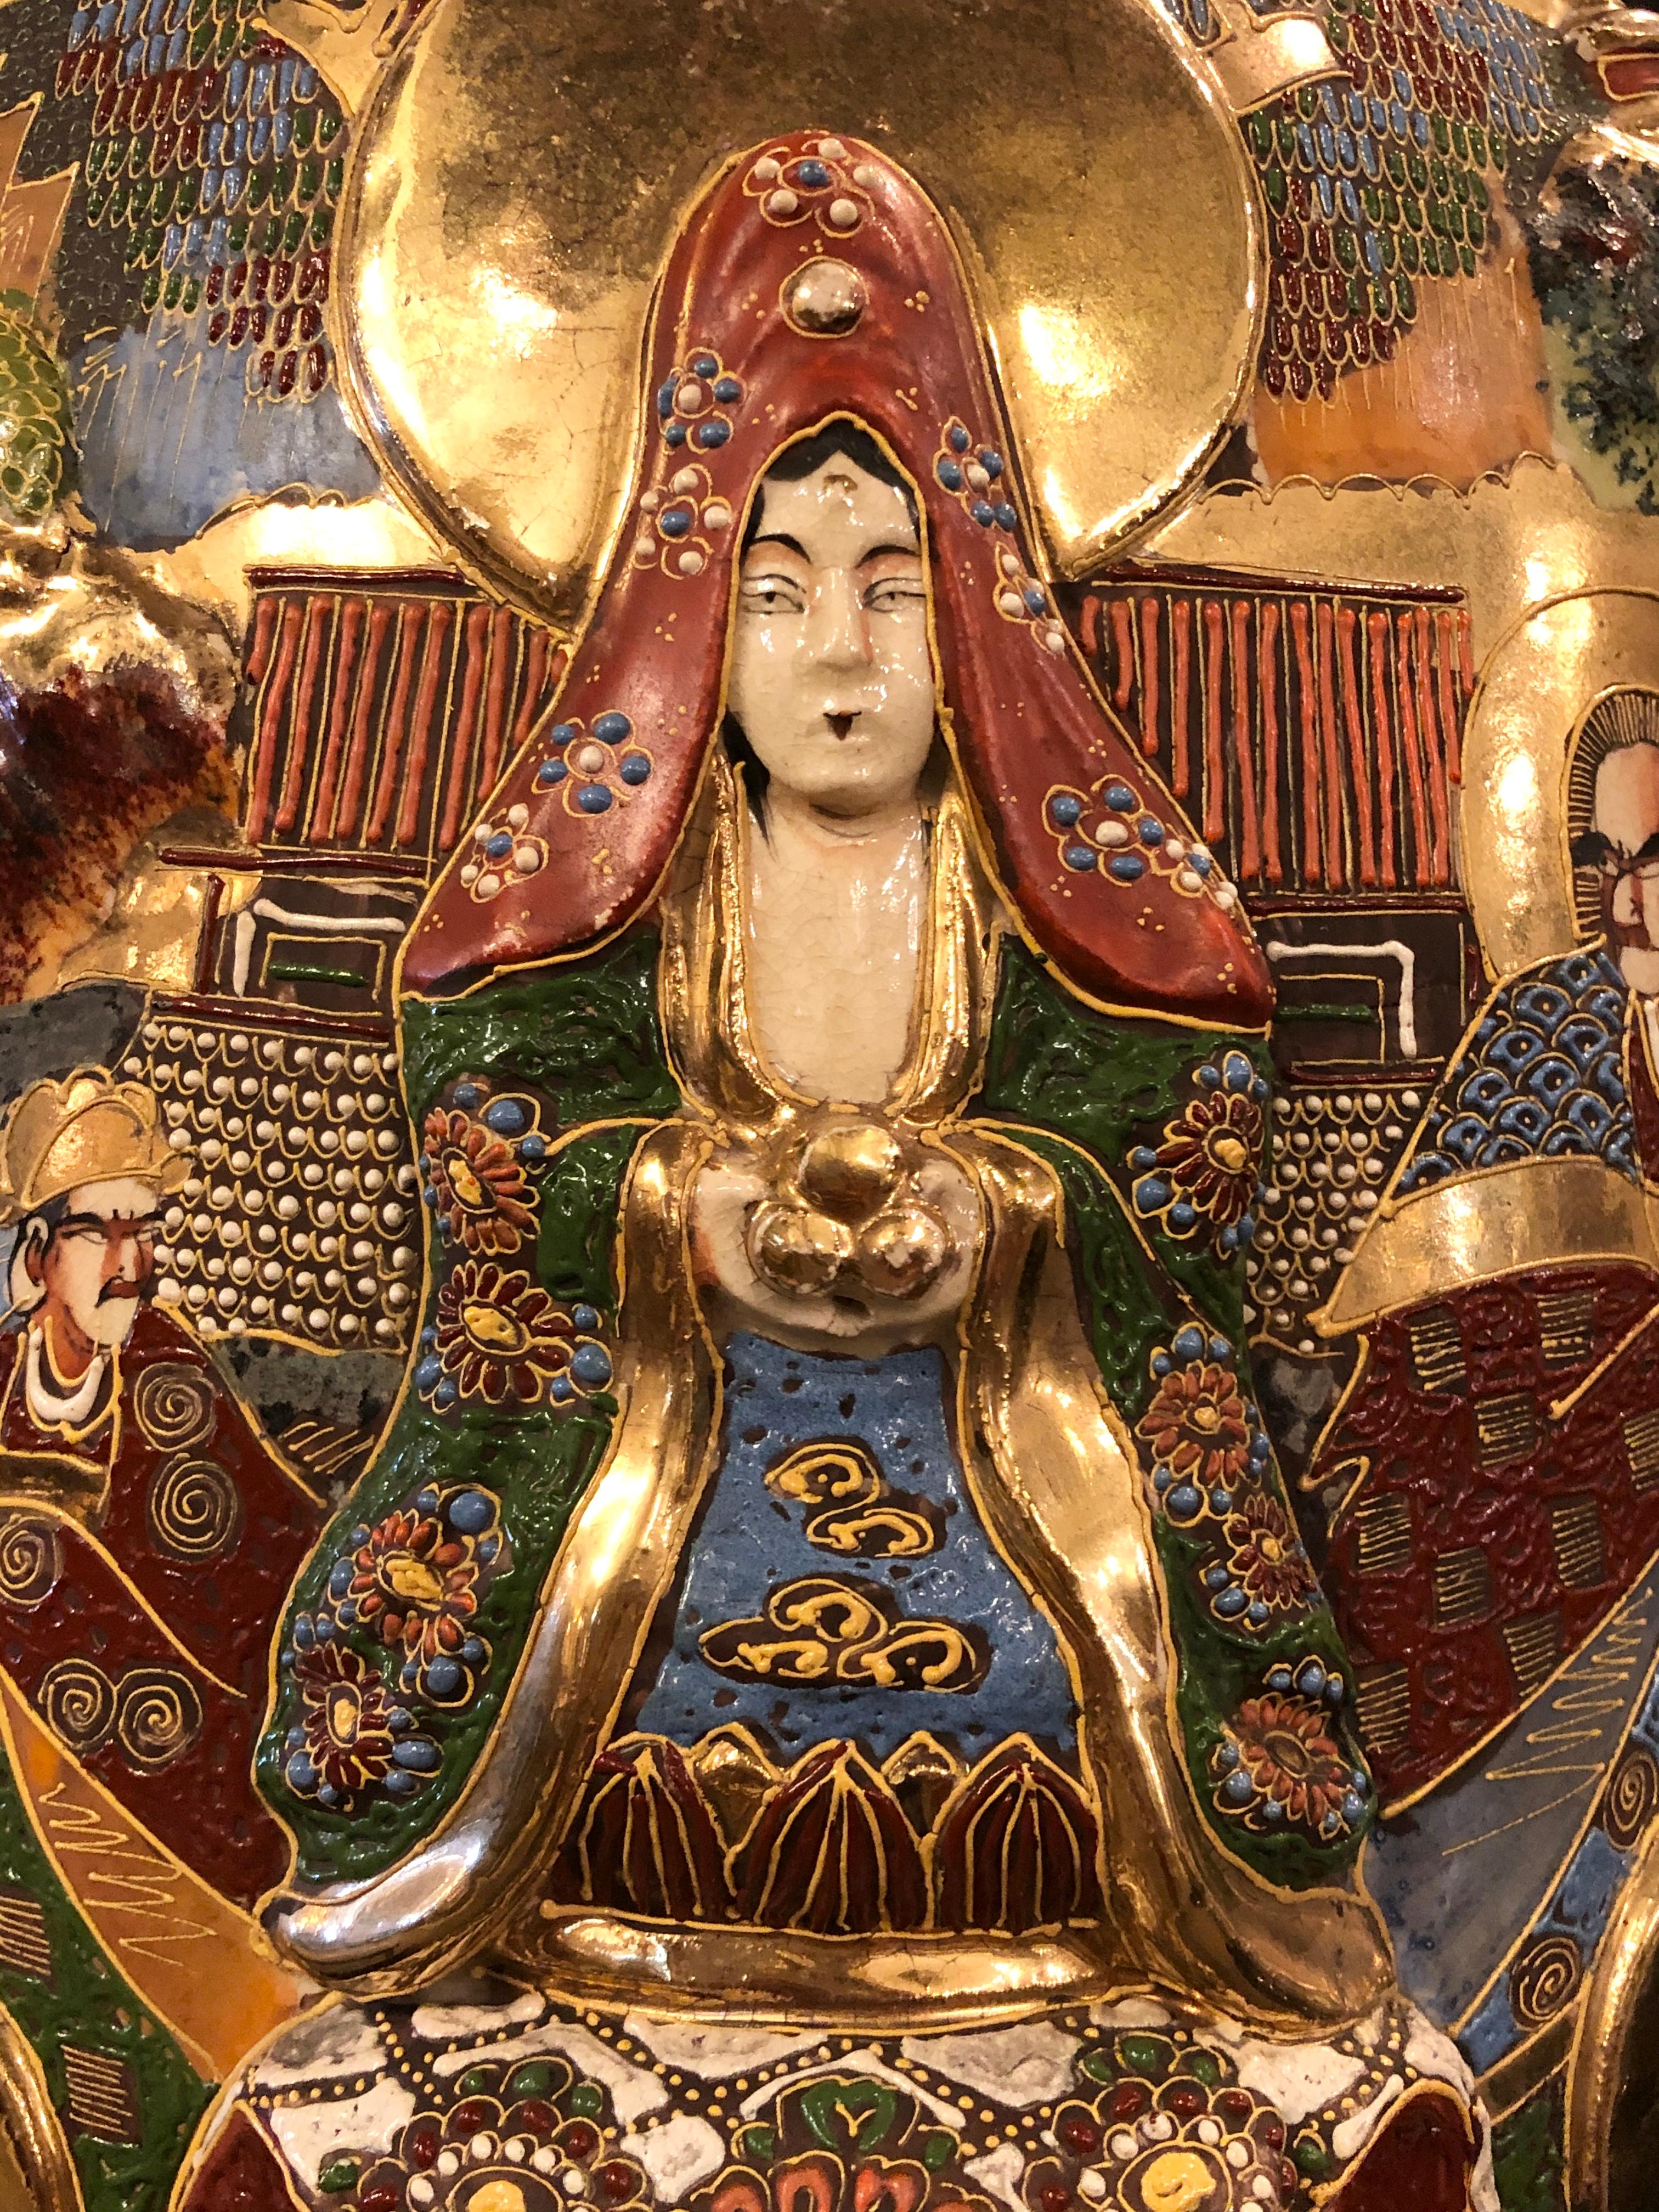 Japonisme Japanese Satsuma Vase with Gold Gilt High Relief Decoration Depicting a Goddess